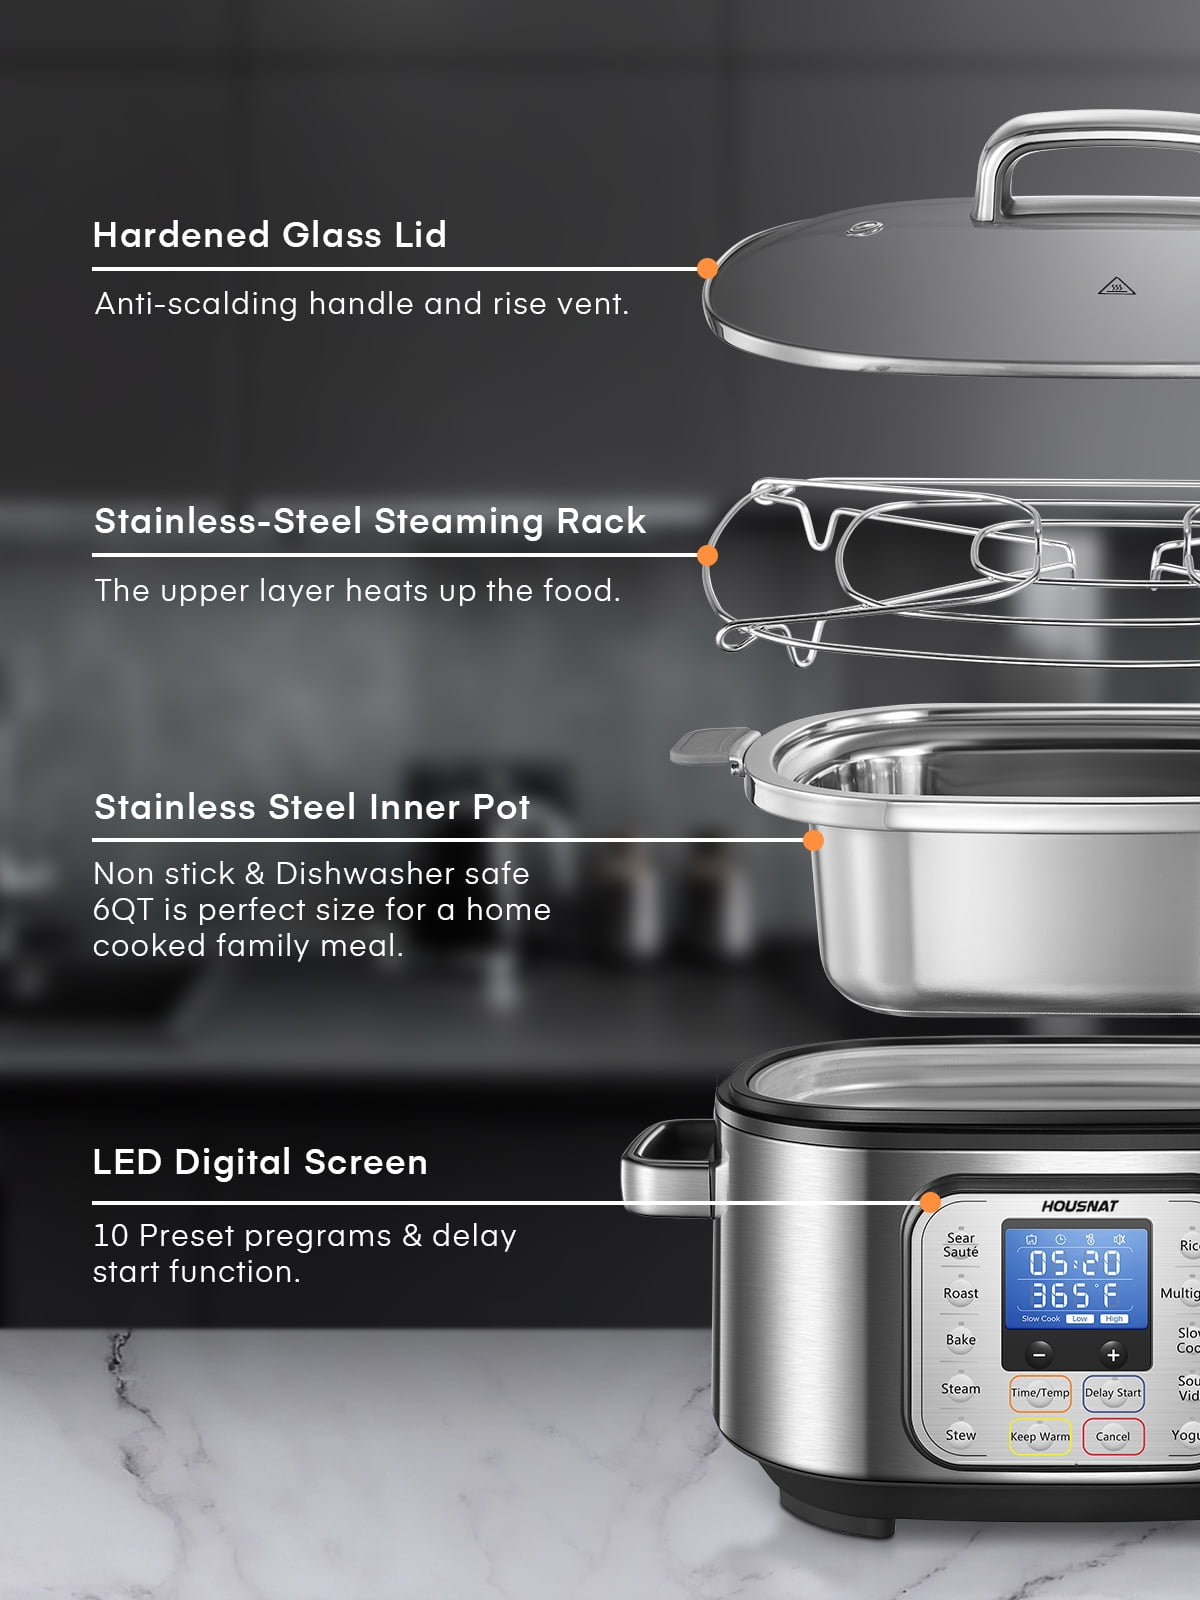 BLUELK 10-in-1 Electric Pressure Cooker, Multi-Functional Slow Cooker, Rice  Cooker, Sauté pan, Soup Pot, Egg Cooker, Warmer, Preset Cooking(6 Quart) 